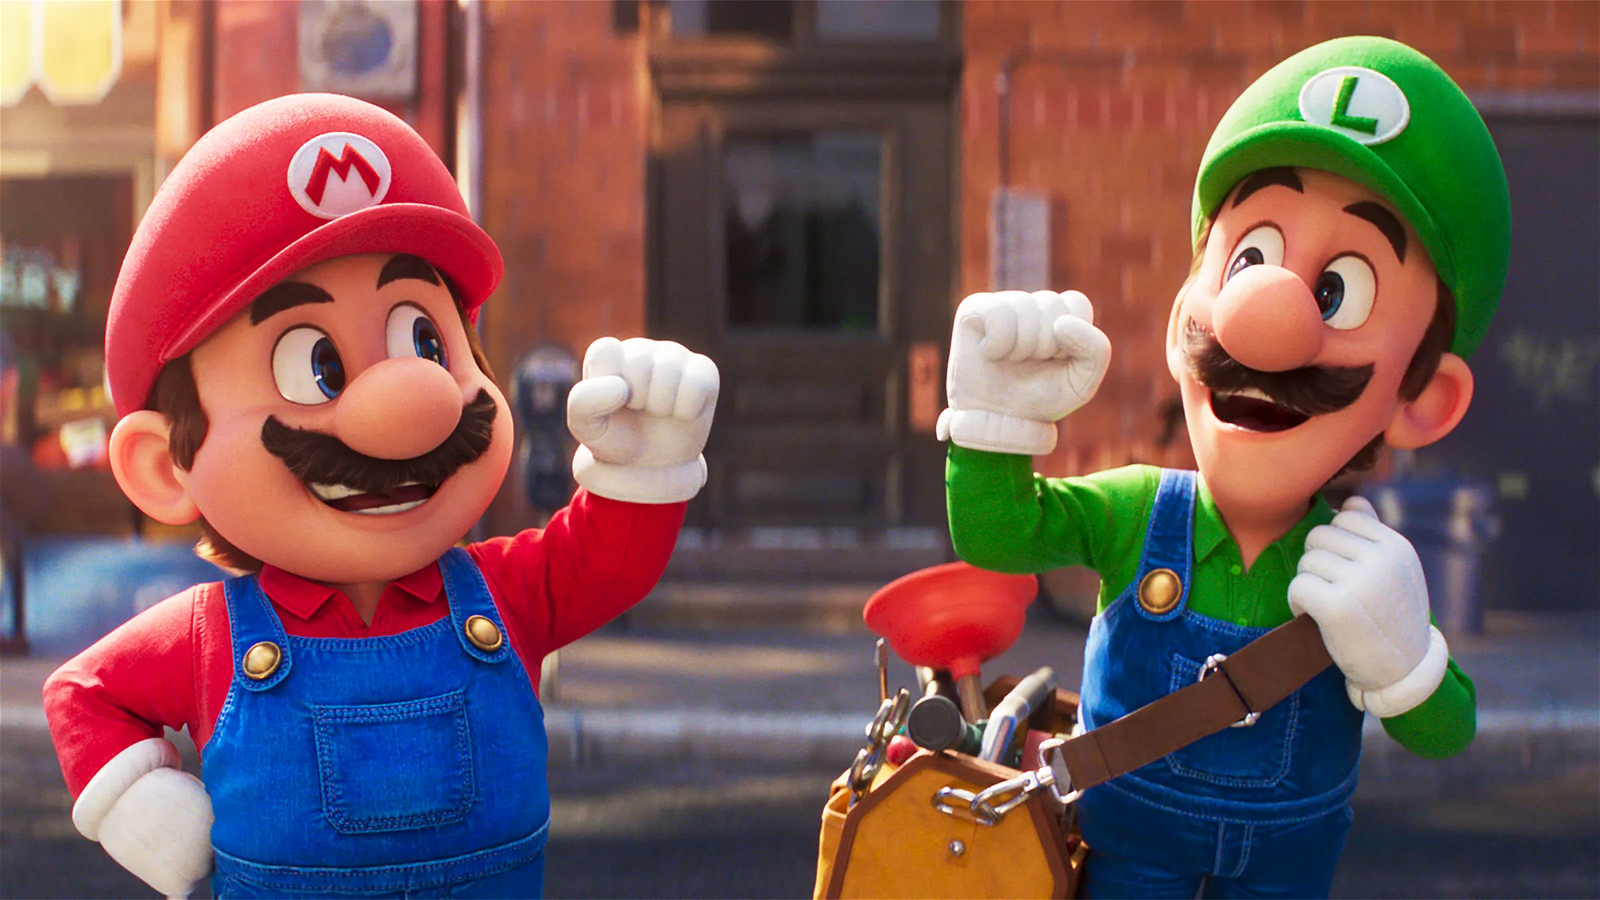 Mario and Luigi, The Super Mario Bros